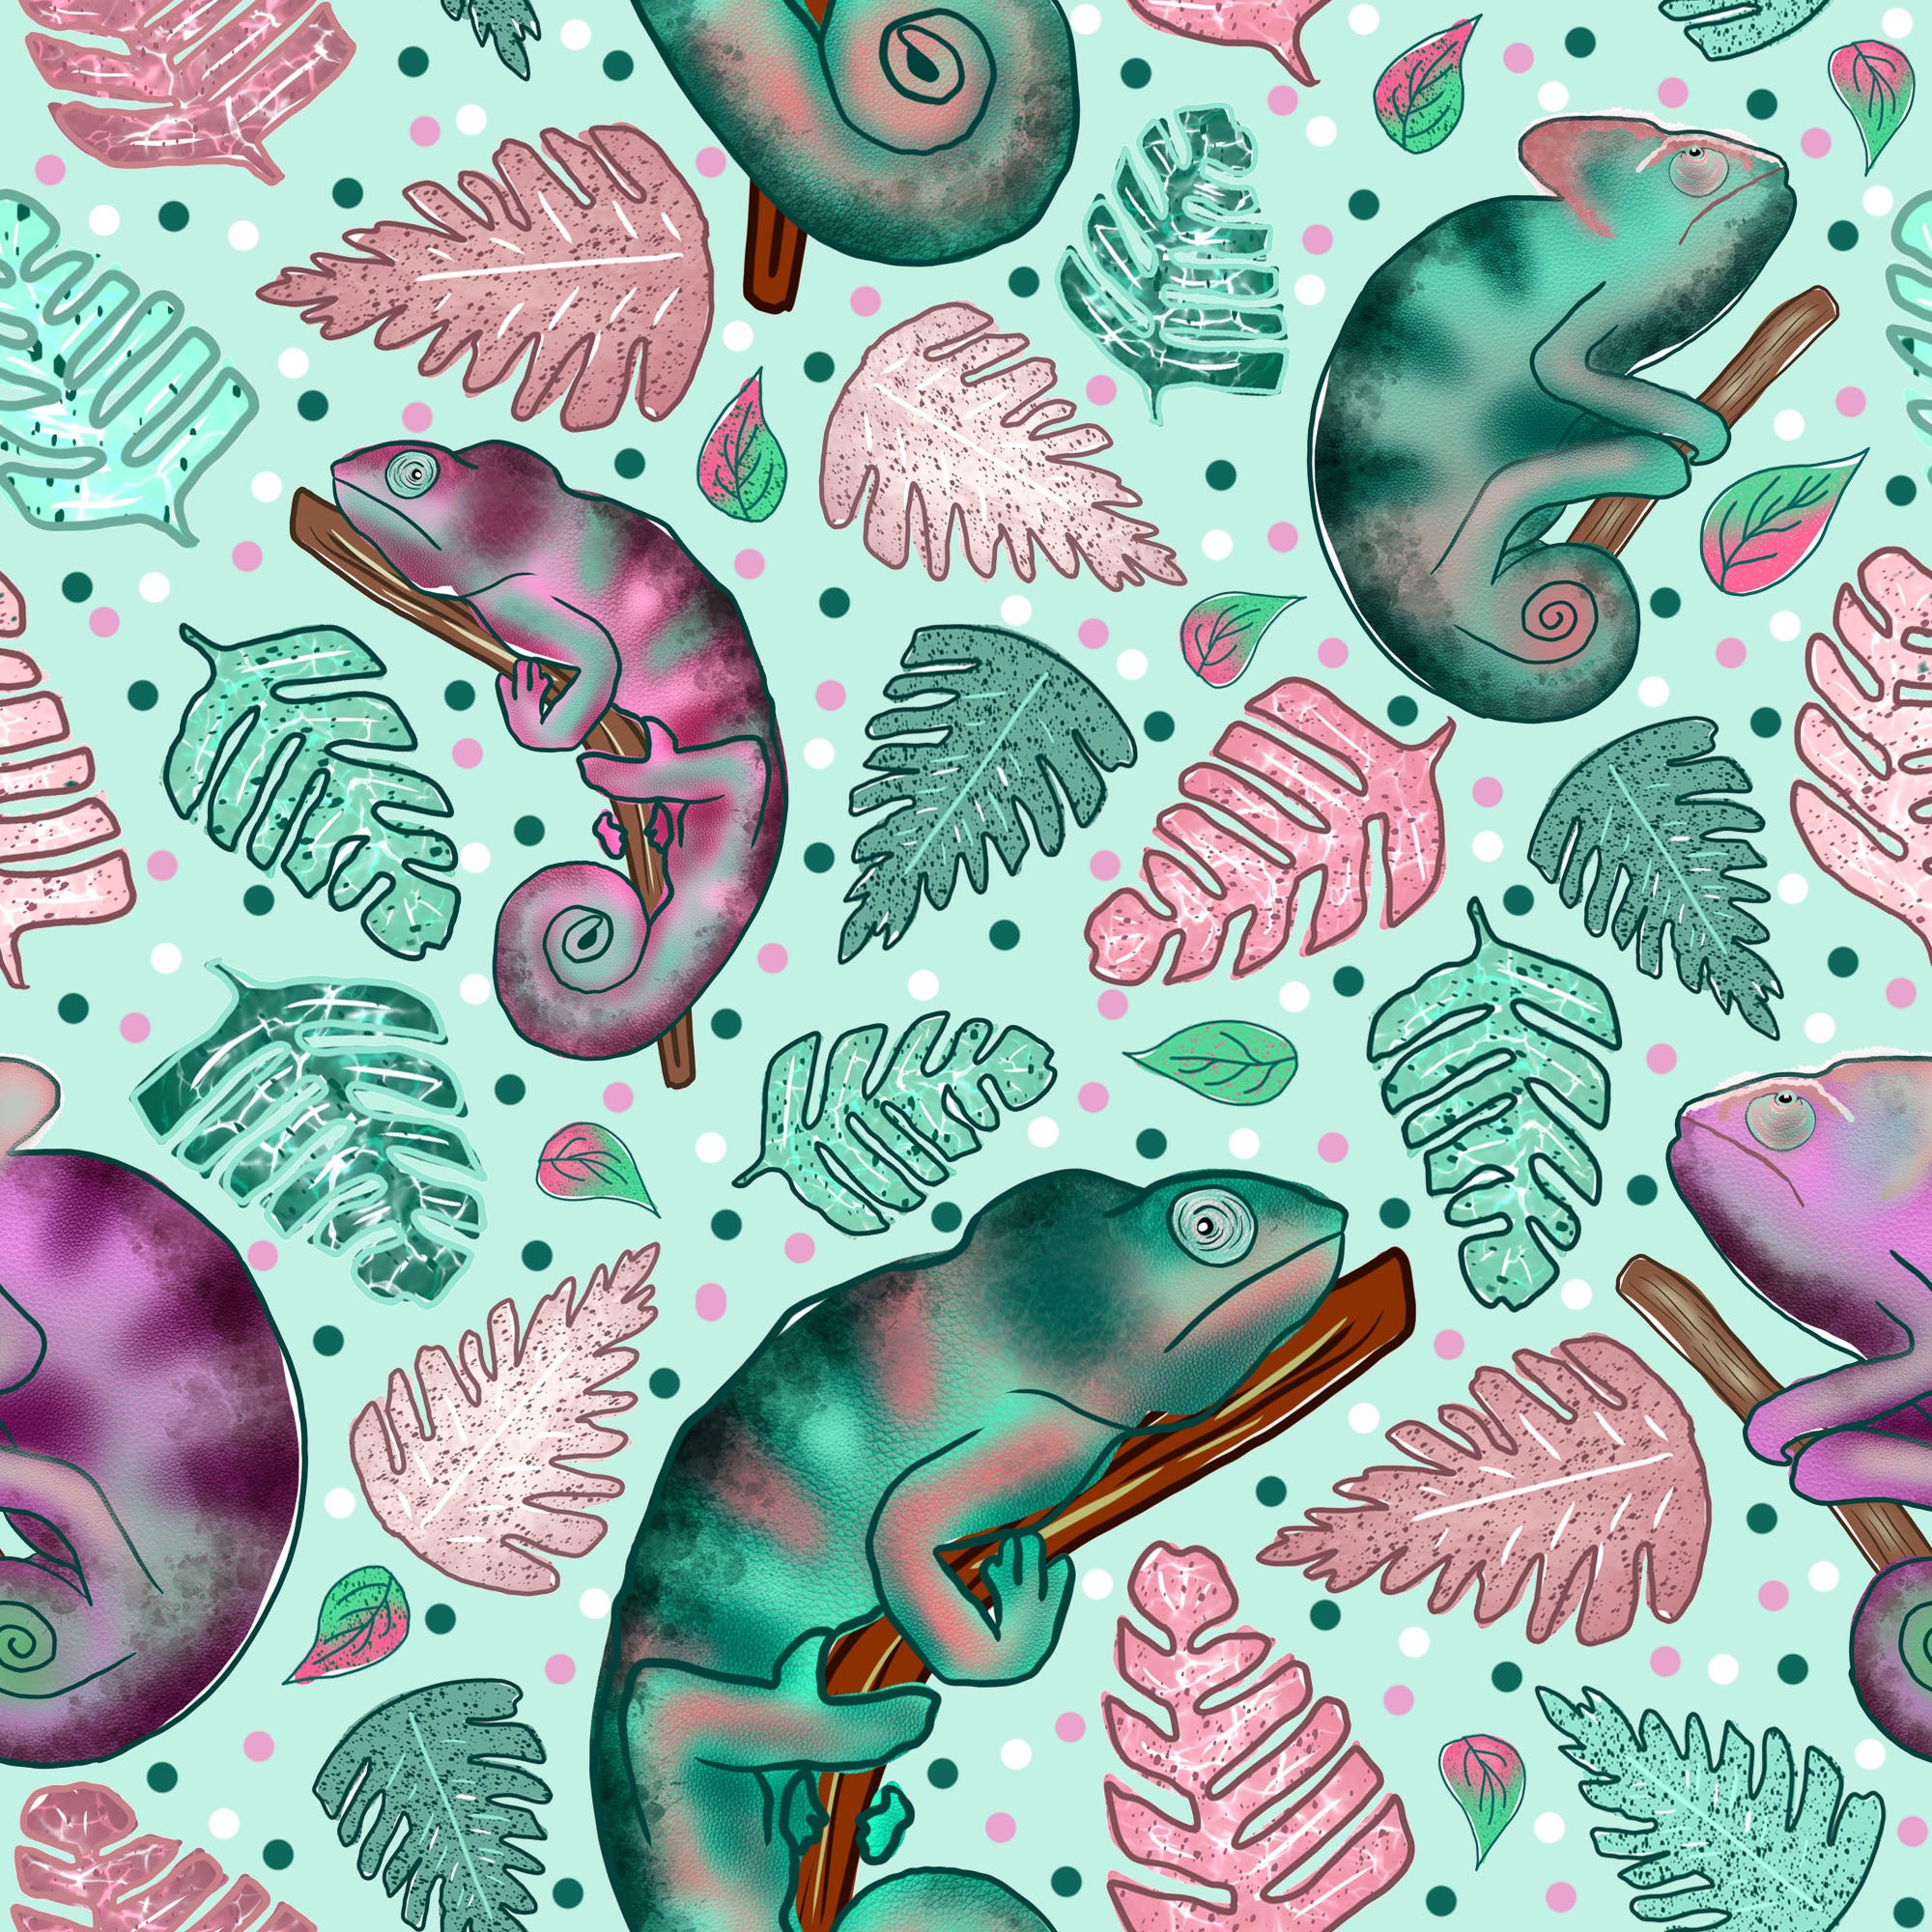 Chameleon surface pattern design